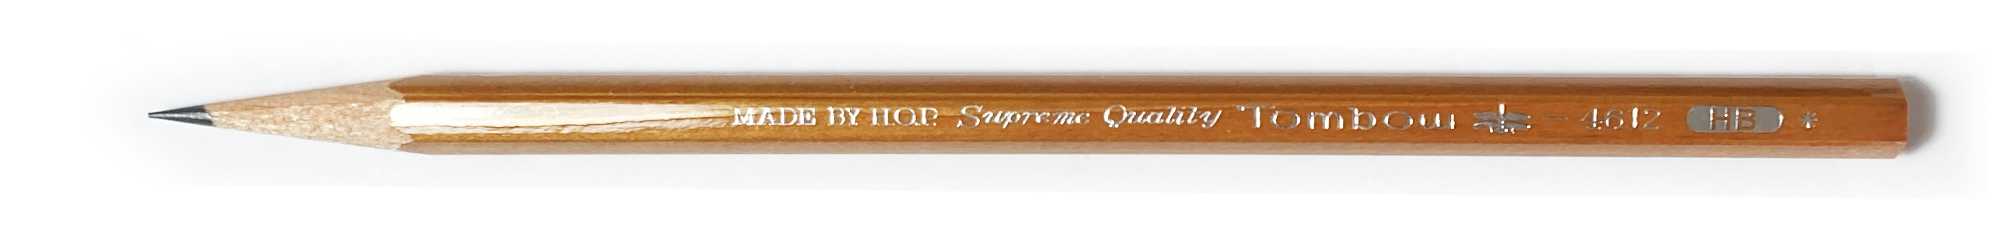 Tombow Homo 4612 Pencil